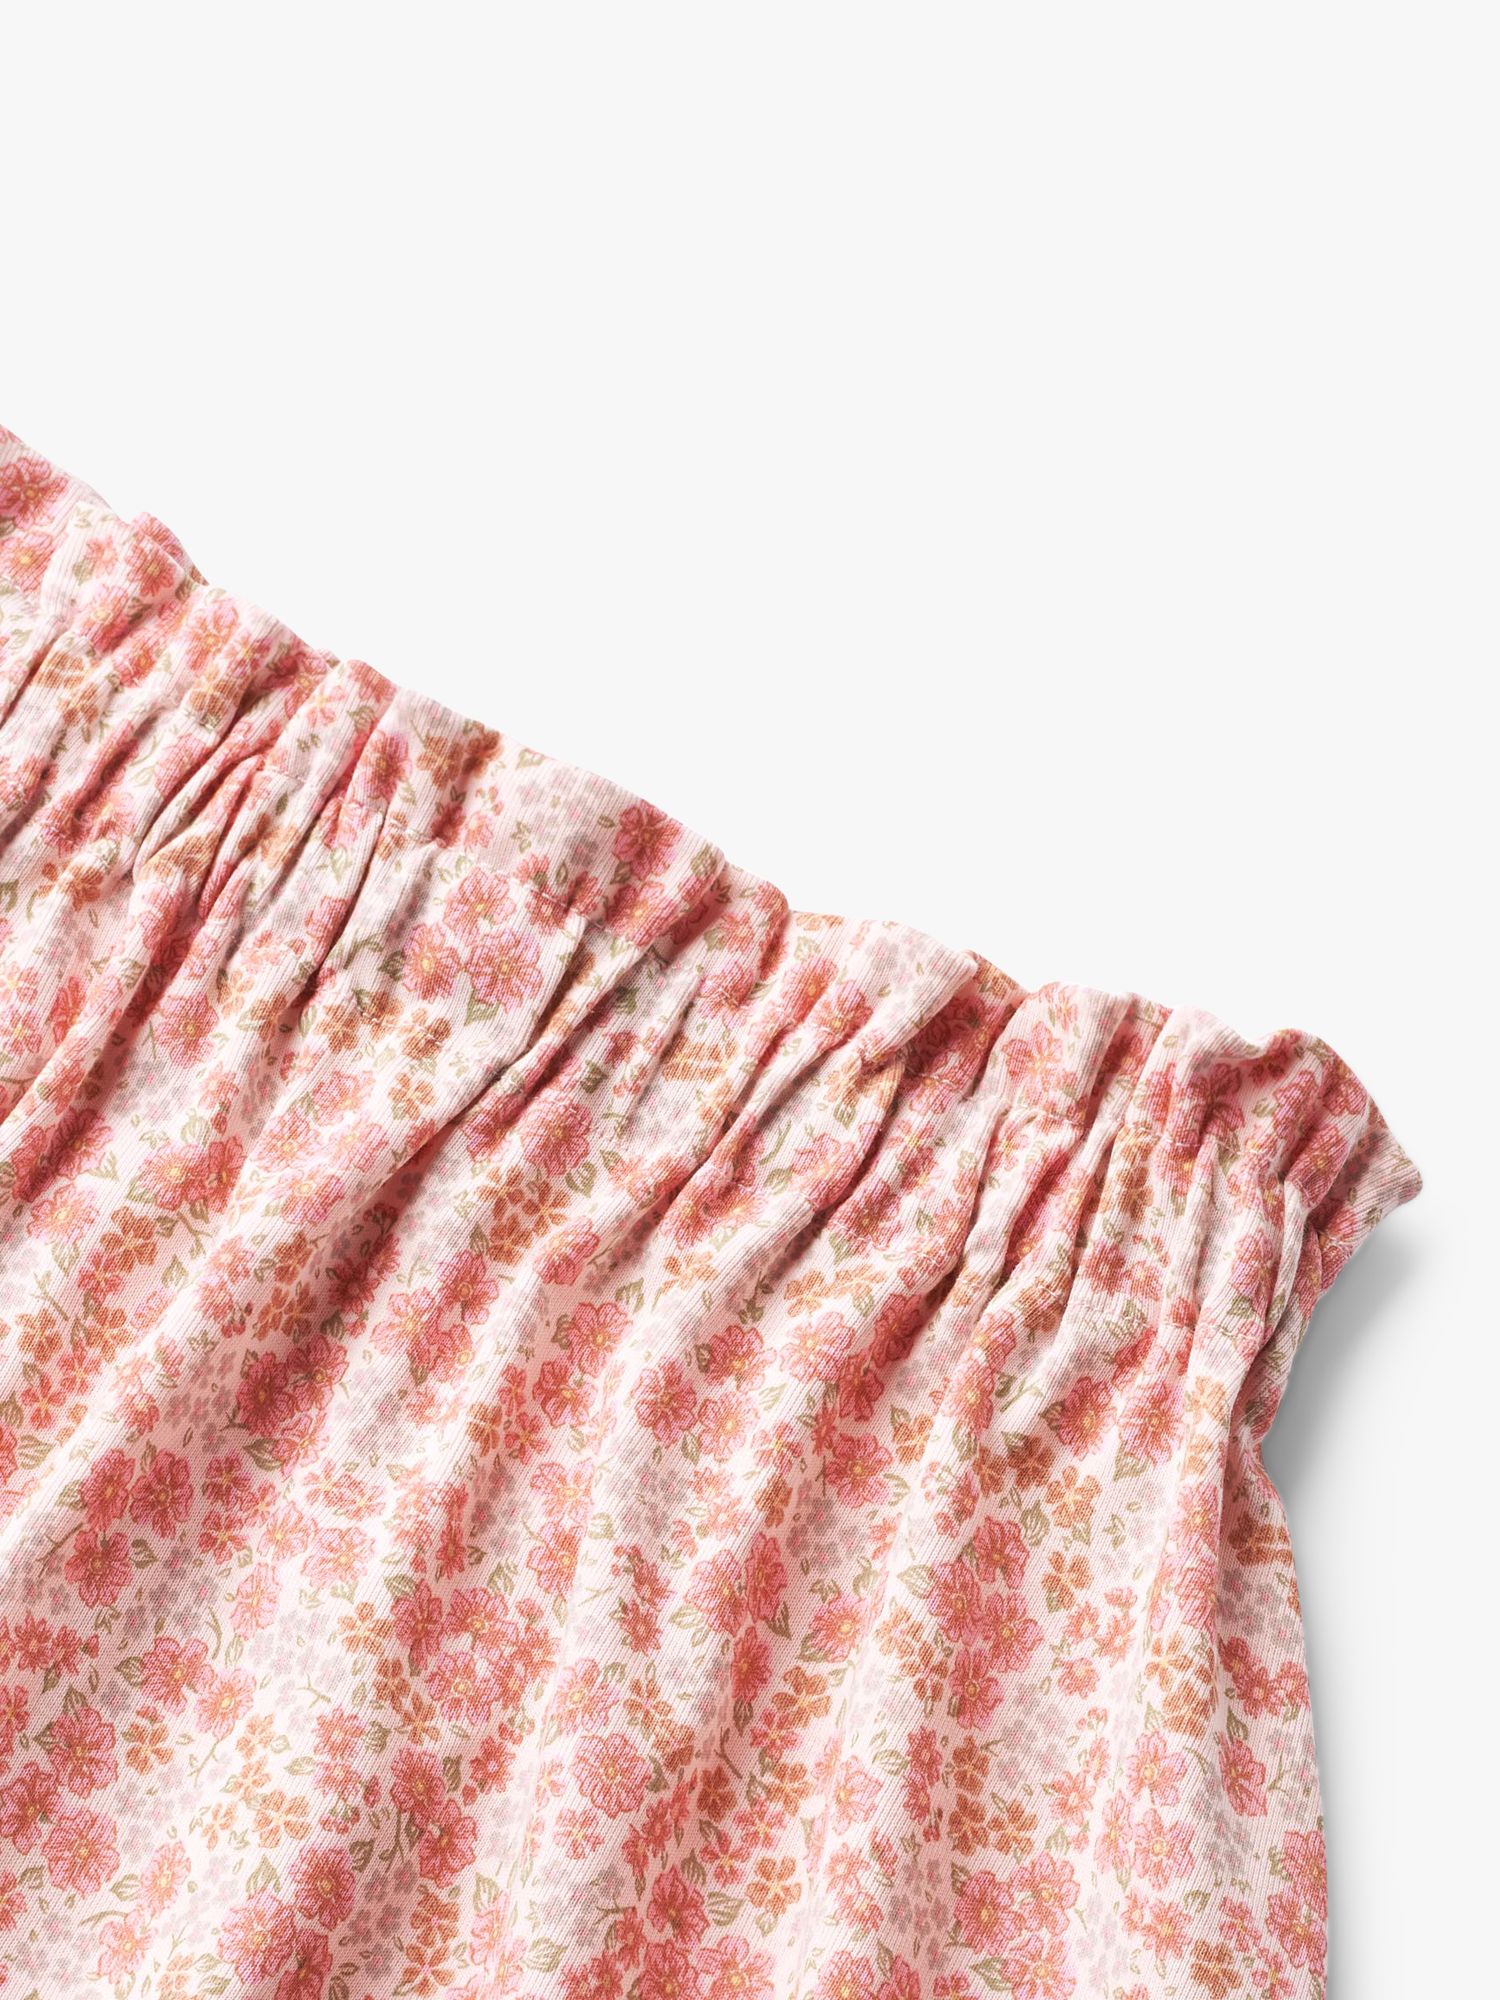 Wheat Kids' Agnetha Organic Cotton Floral Print Skirt, Pink, 3 years